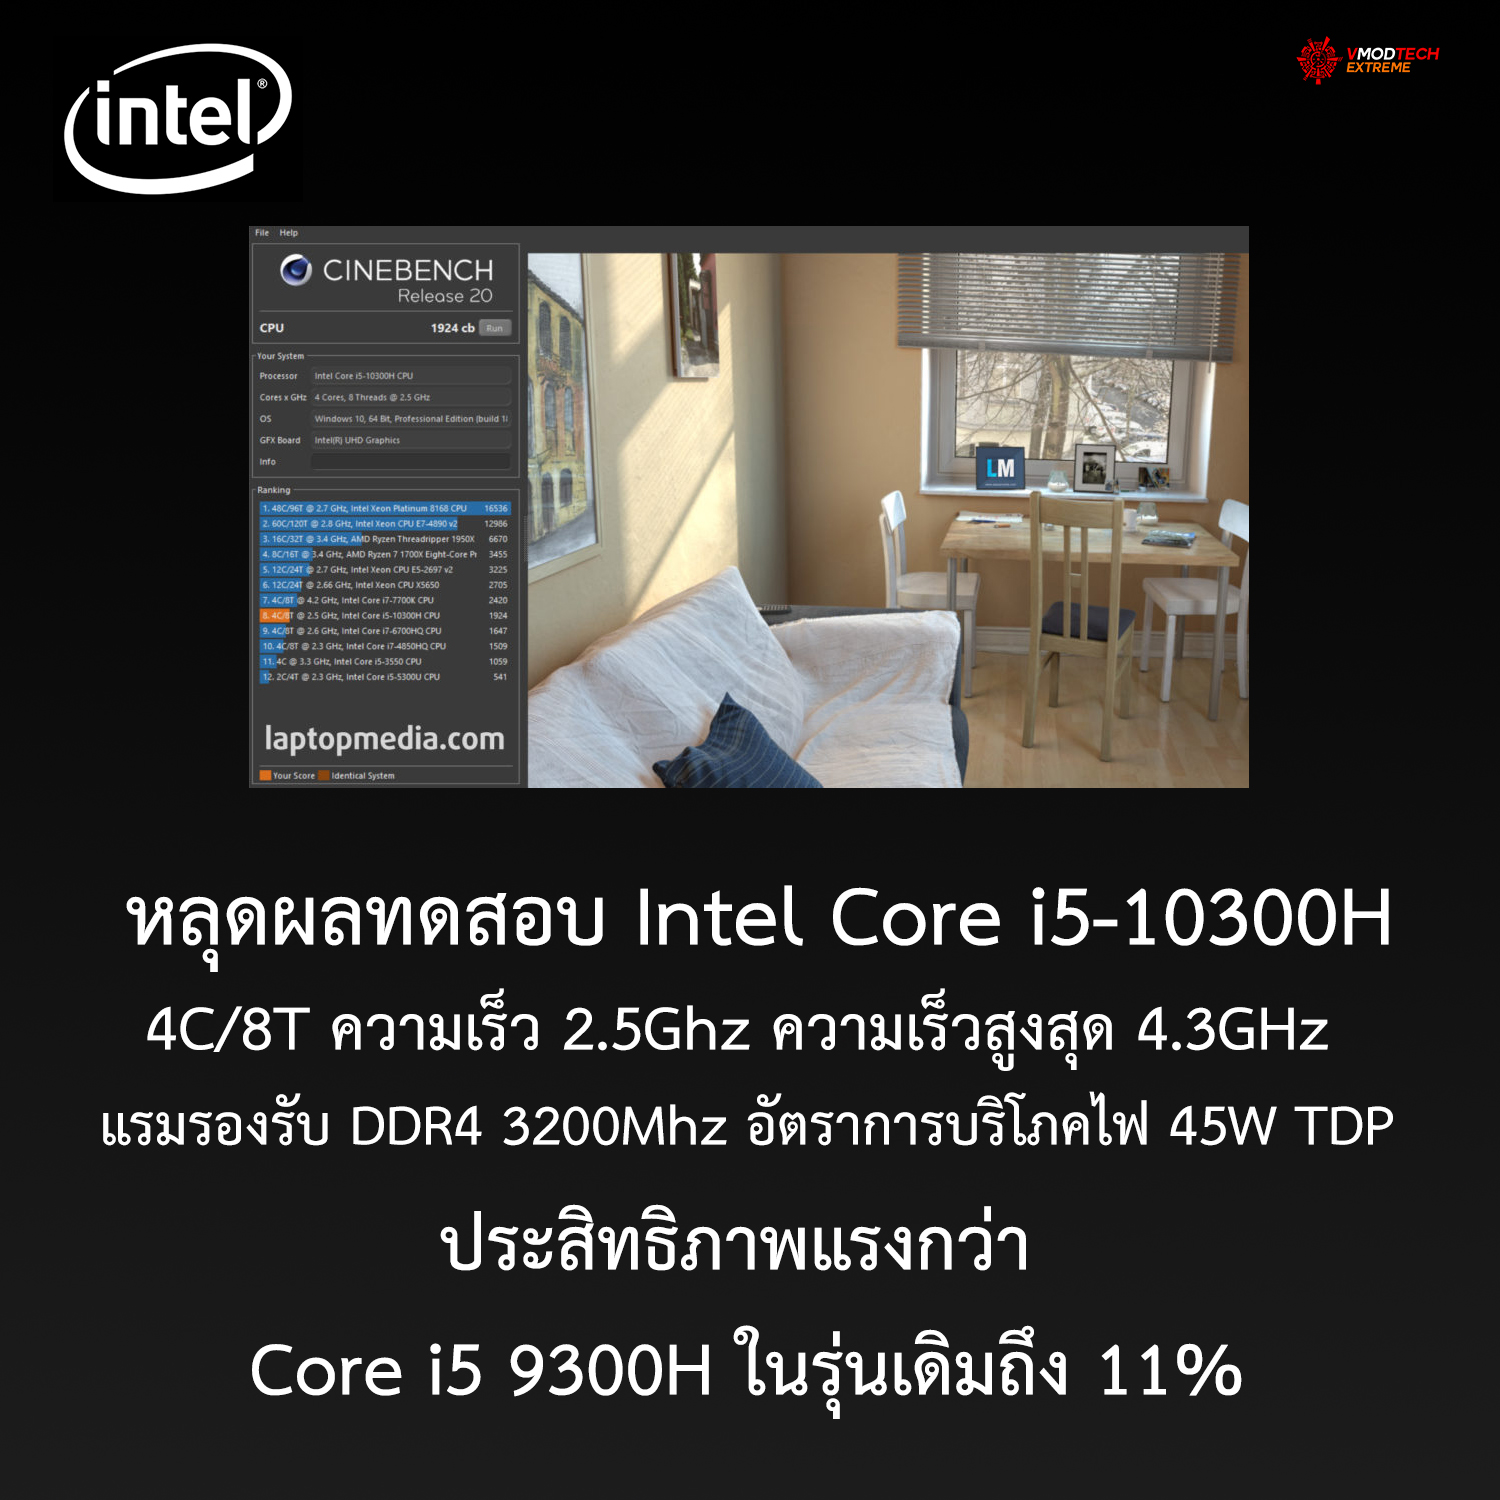 intel core i5 10300h หลุดผลทดสอบ Intel Core i5 10300H ในโปรแกรม Cinebench แรงแซง Core i5 รุ่นเดิมกันเลยทีเดียว